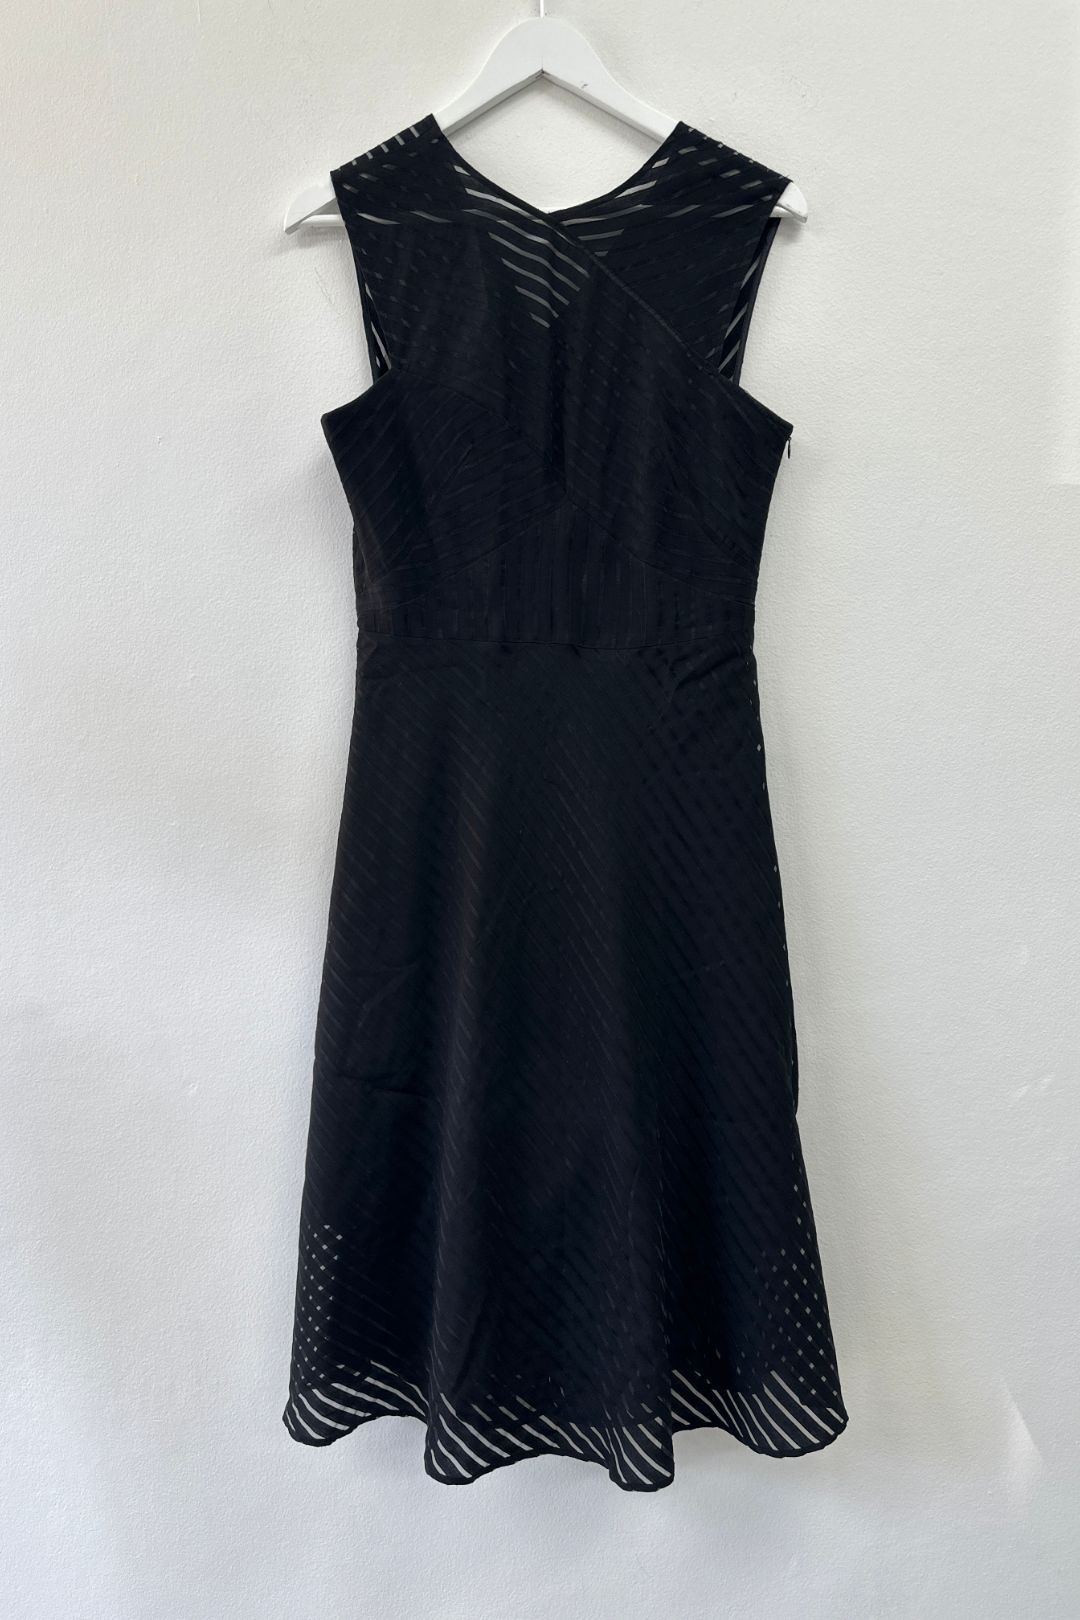 Veronika Maine - Sheer Black Striped Midi Dress